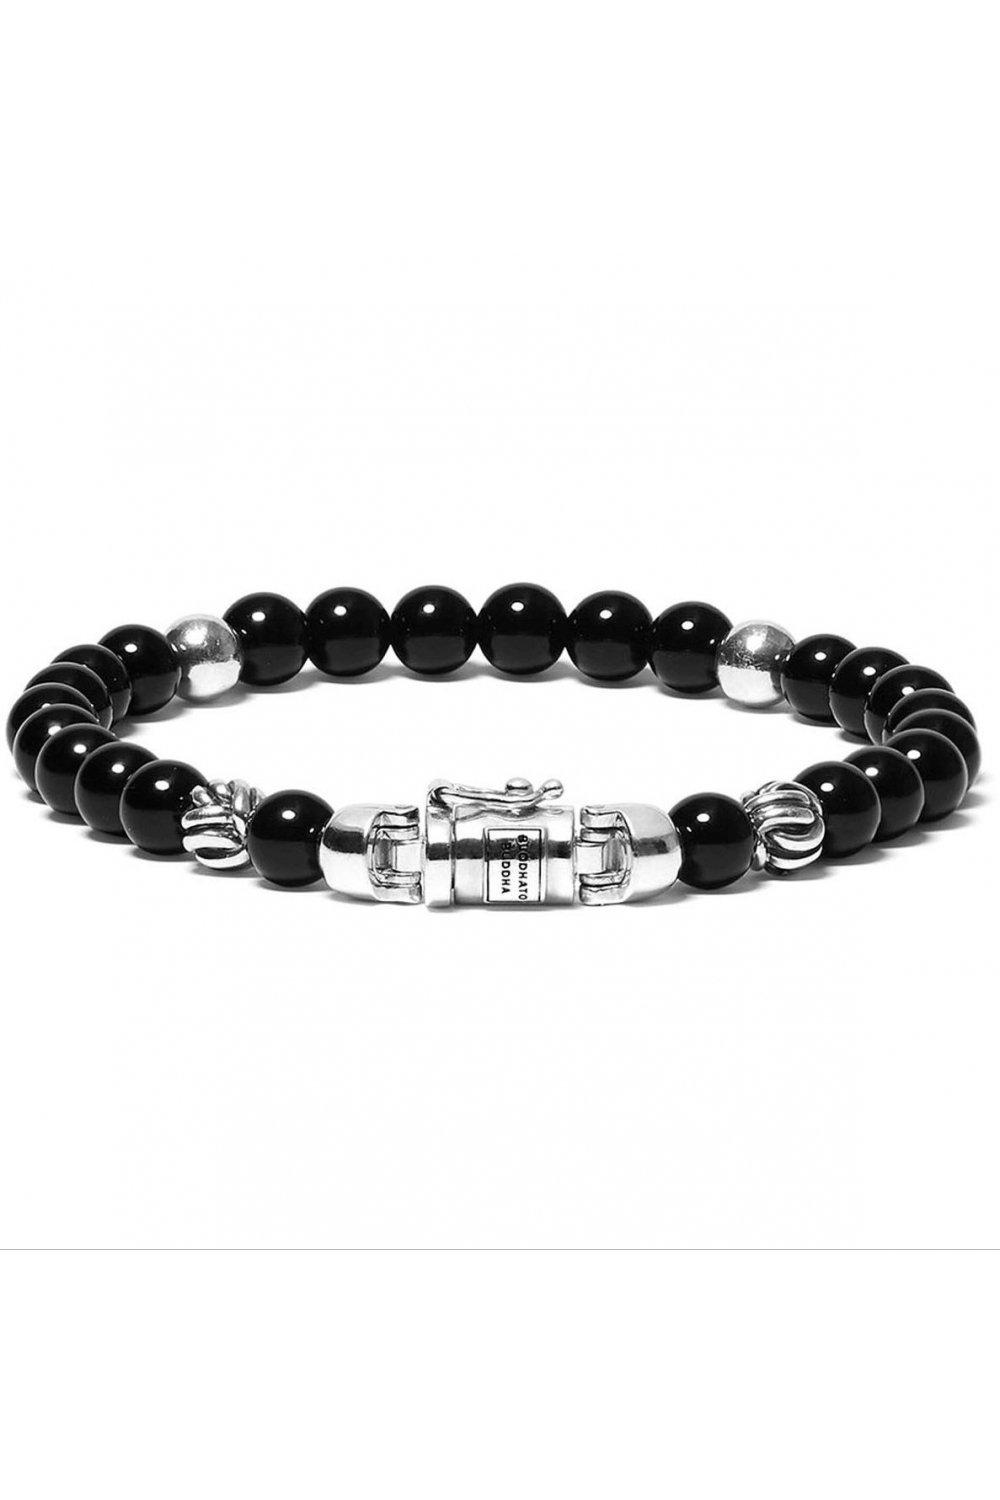 189on f spirit bead mini onyx fashion bracelet - 001j011891506